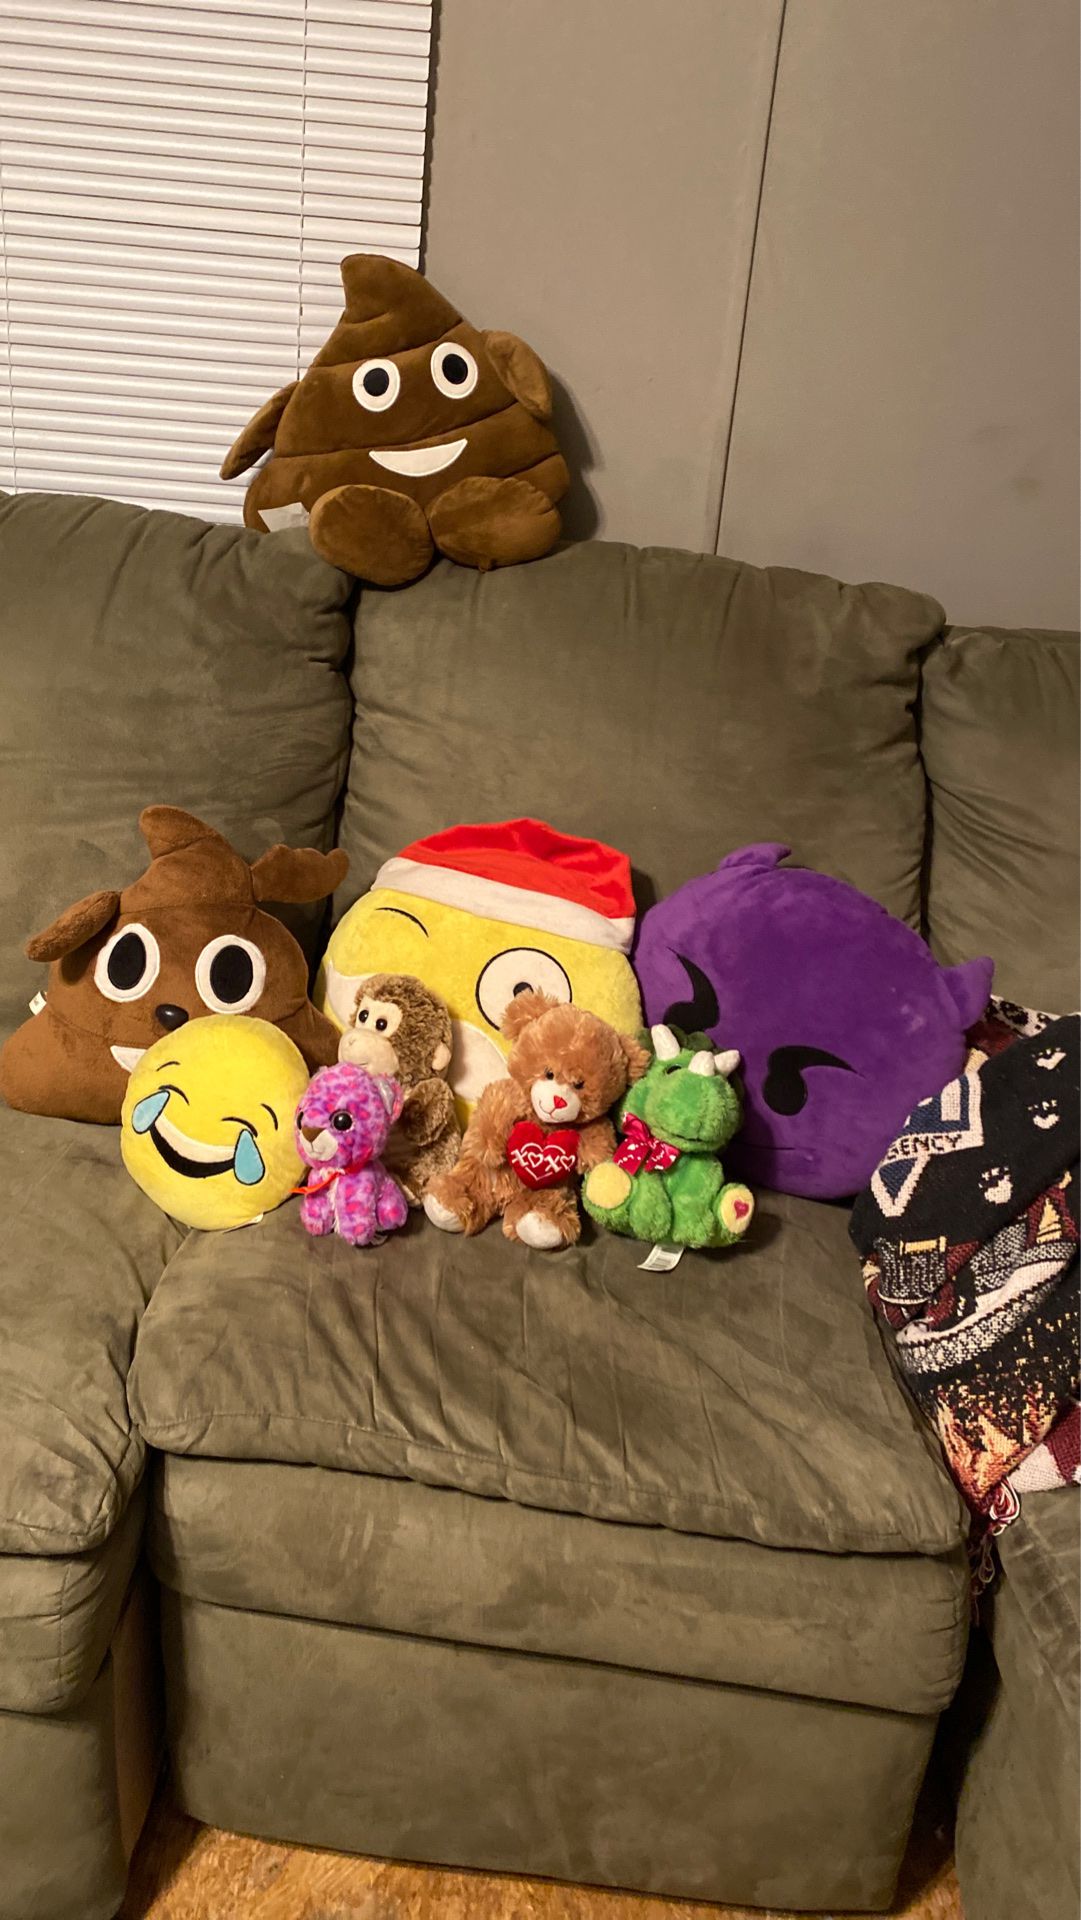 Stuffed emojis and animals